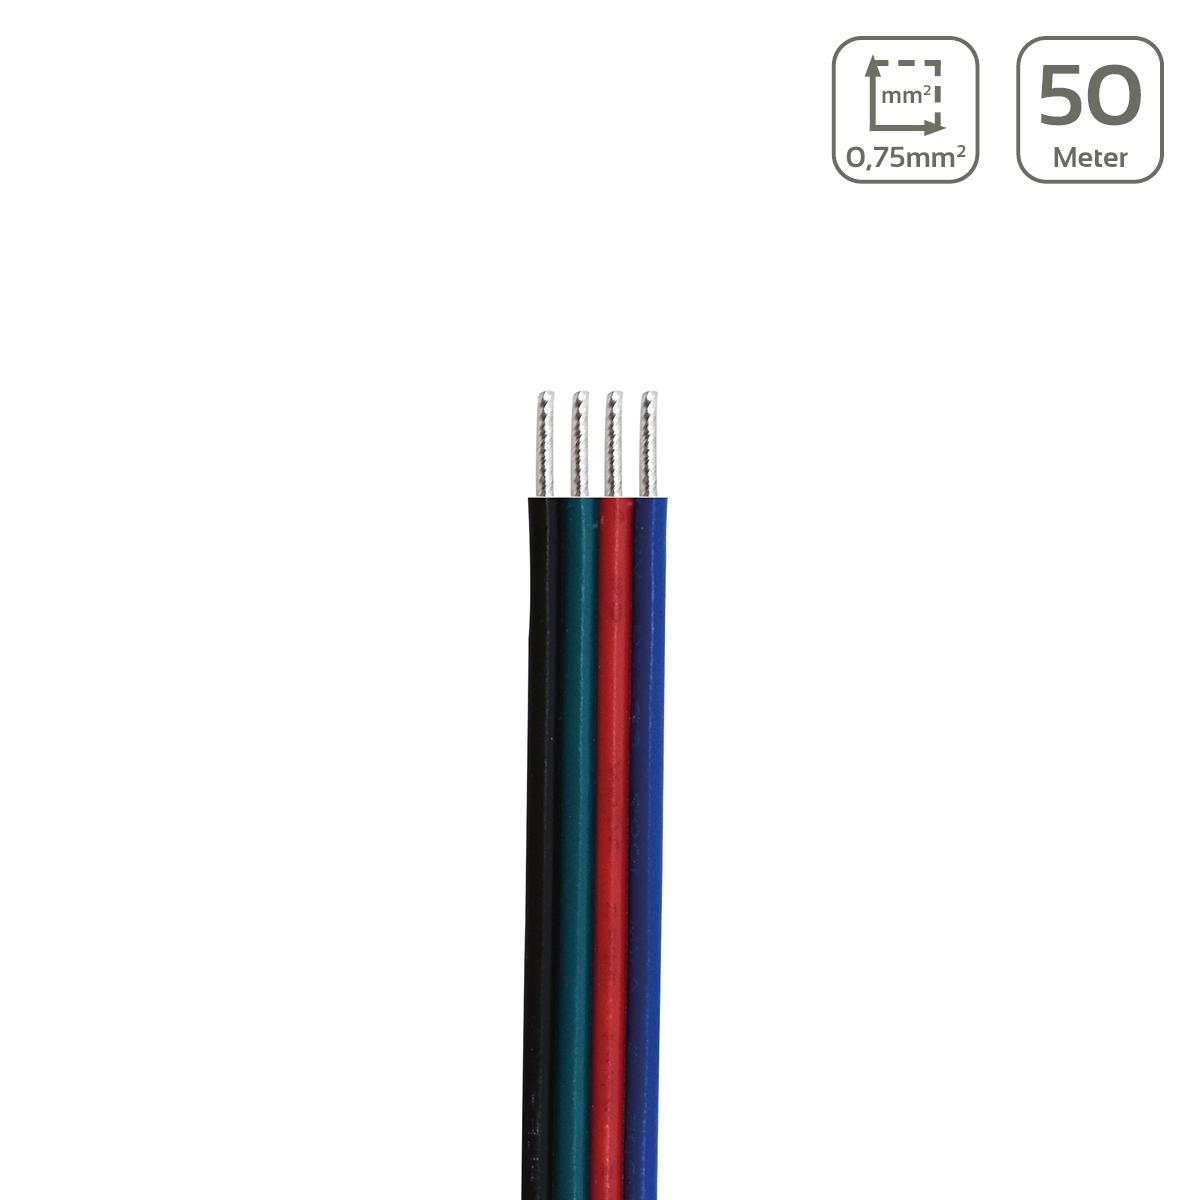 LED Kabel RGB 4-polig - Querschnitt: 4x0,75mm² / AWG18 - Länge: 50m